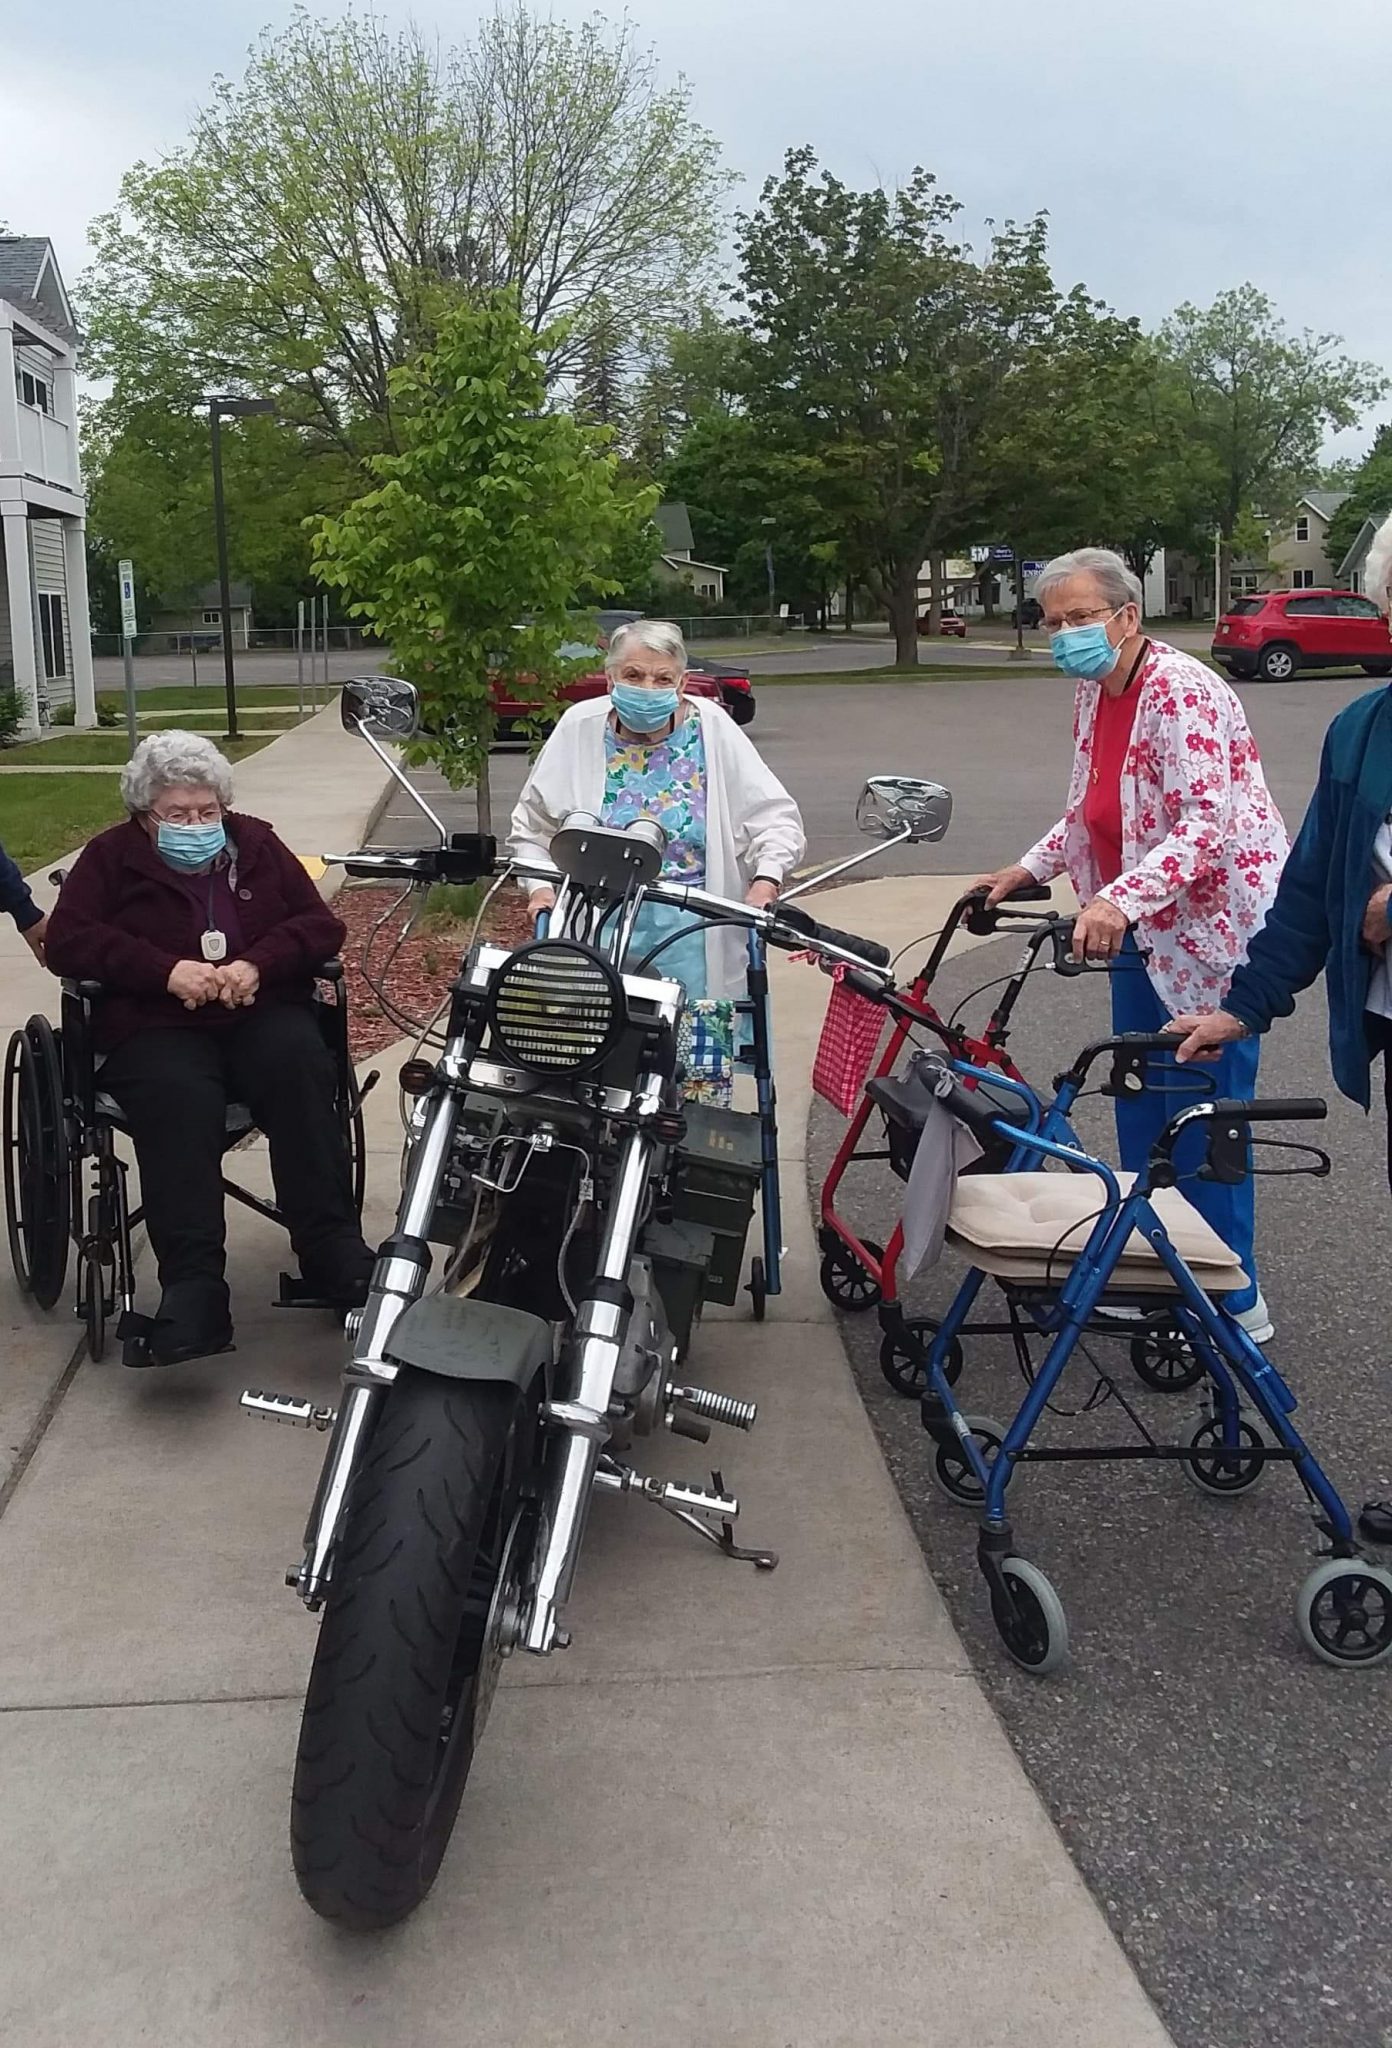 Car show participants visit Milestone Senior Living on motorcycles